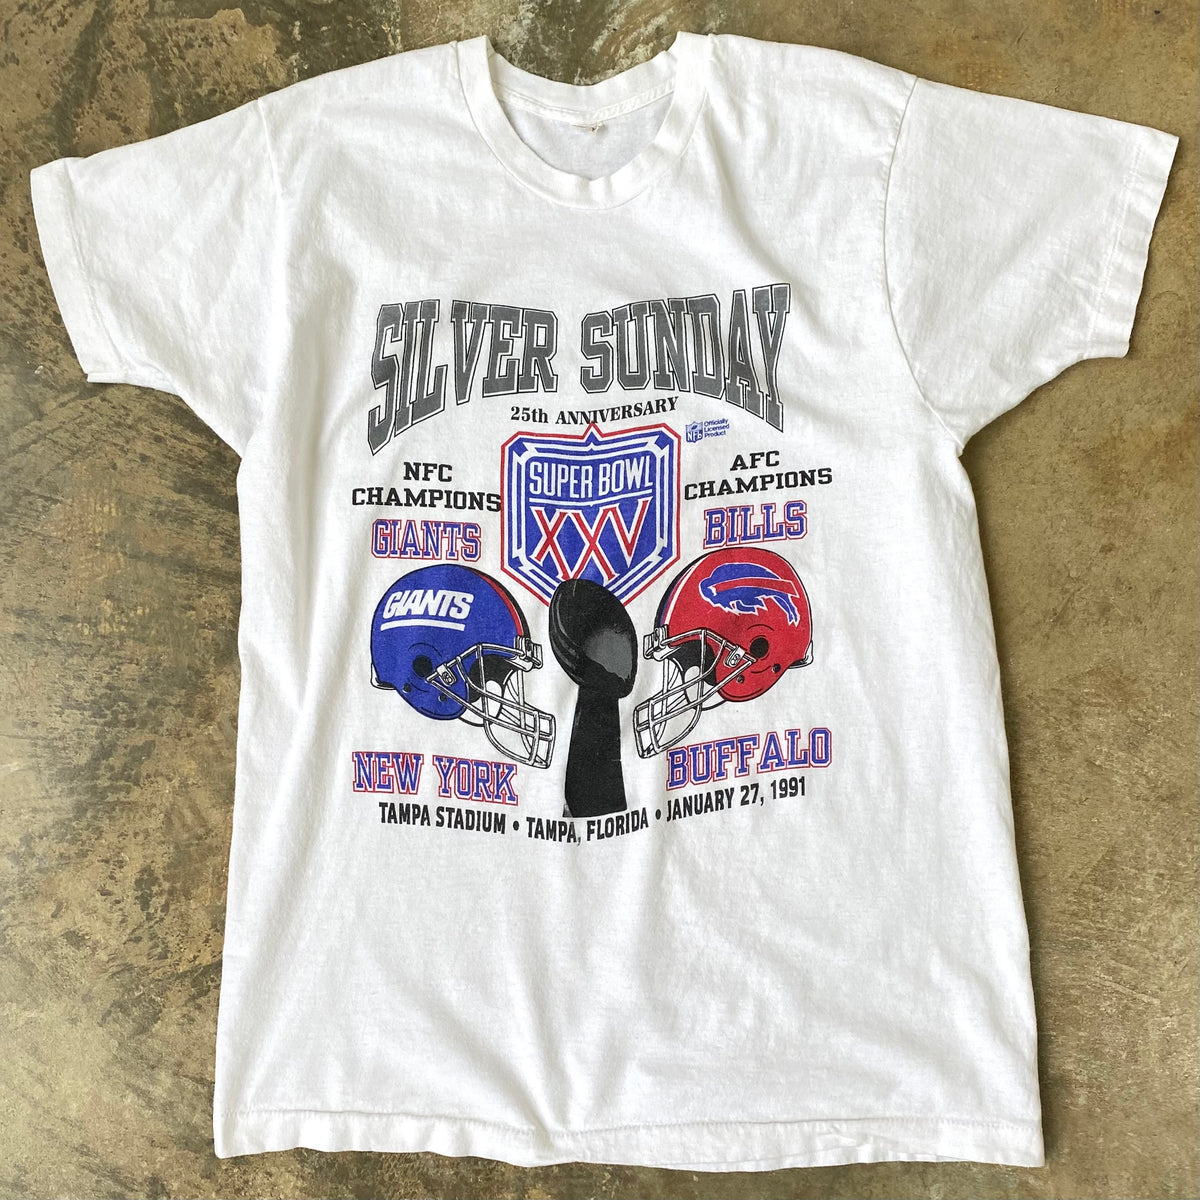 Super Bowl XXV Champions Bills Shirt